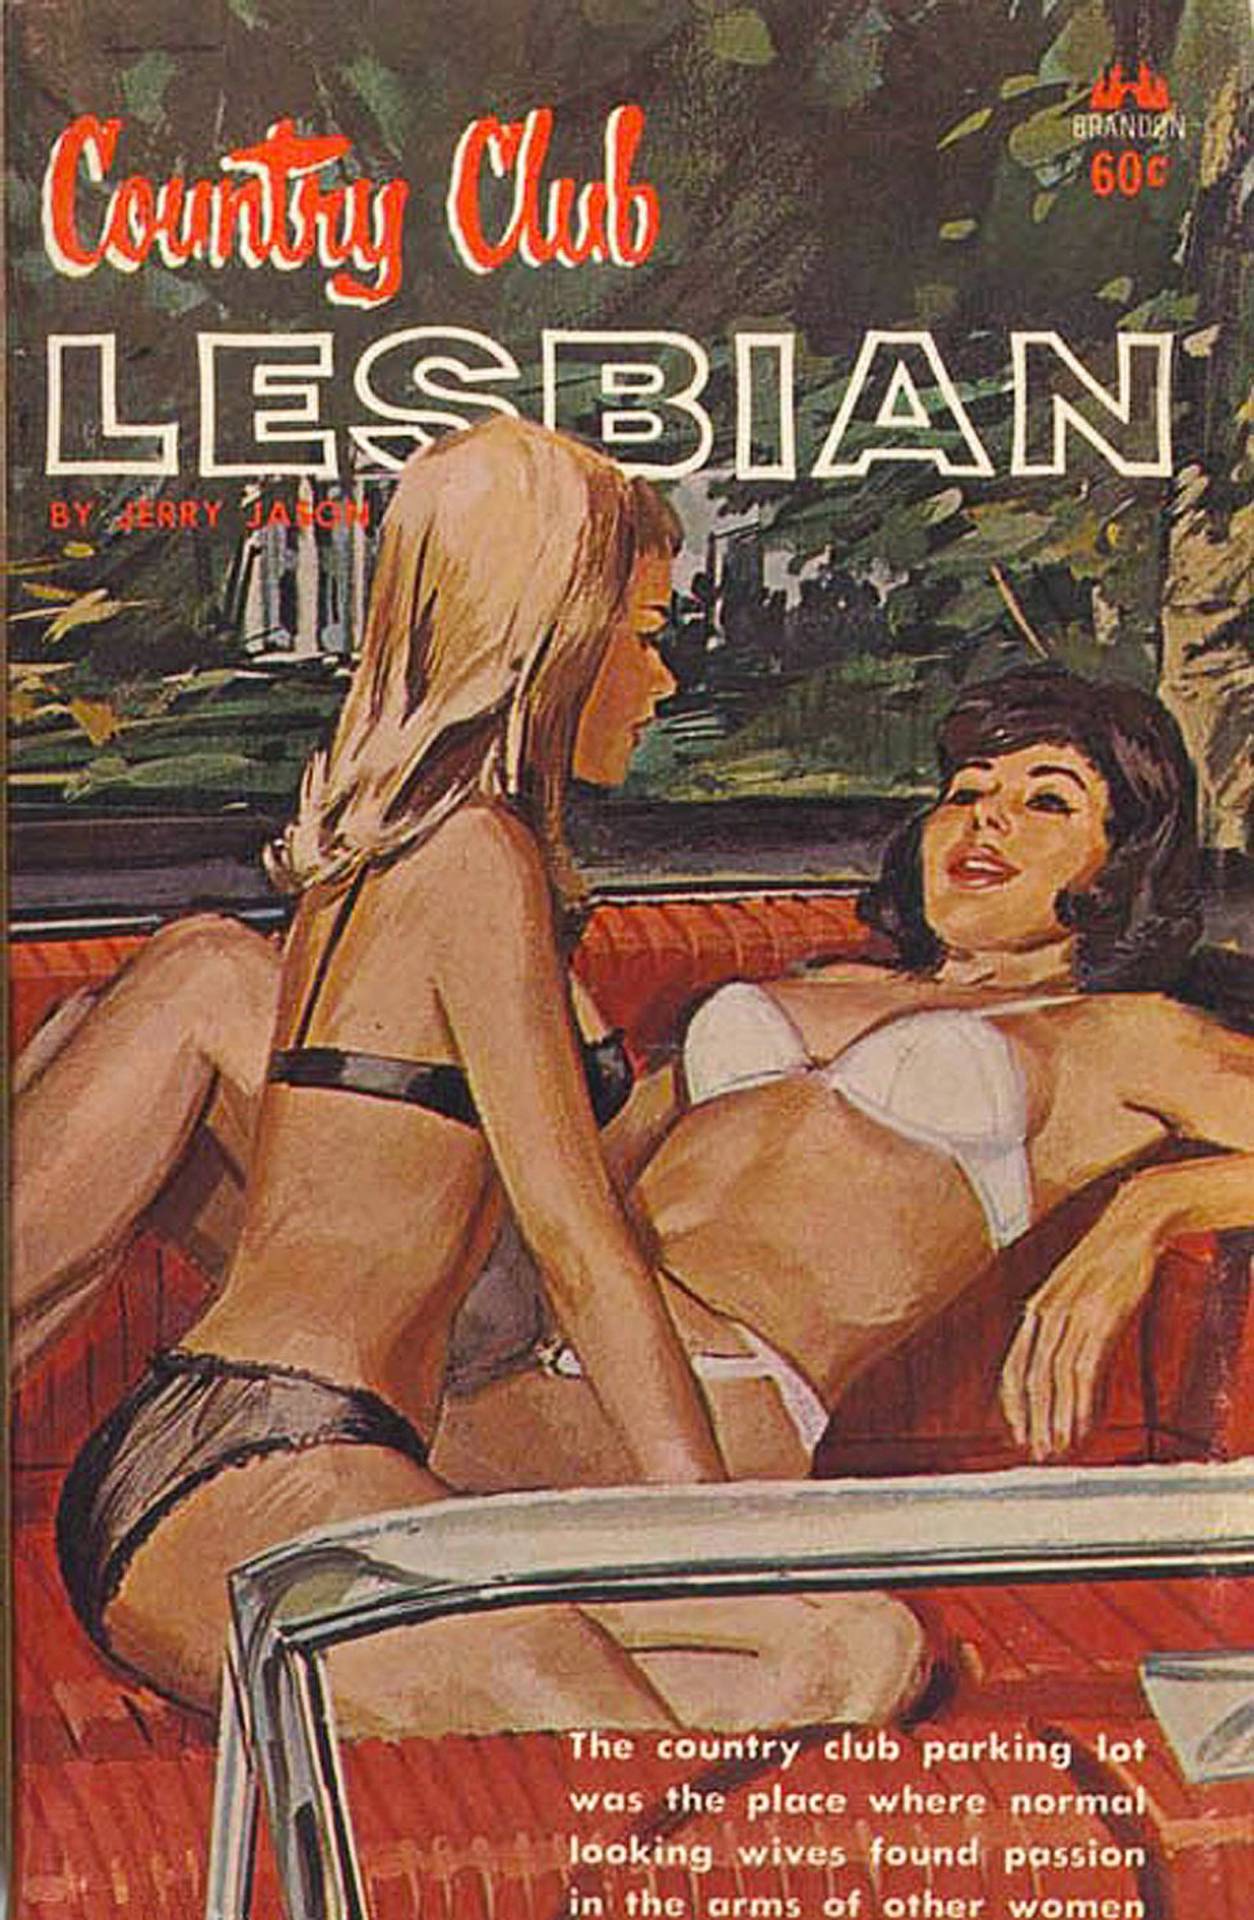 snootyfoxfashion:Vintage Lesbian Pulp Art Prints from PulptasticPrintsv / xx / xx